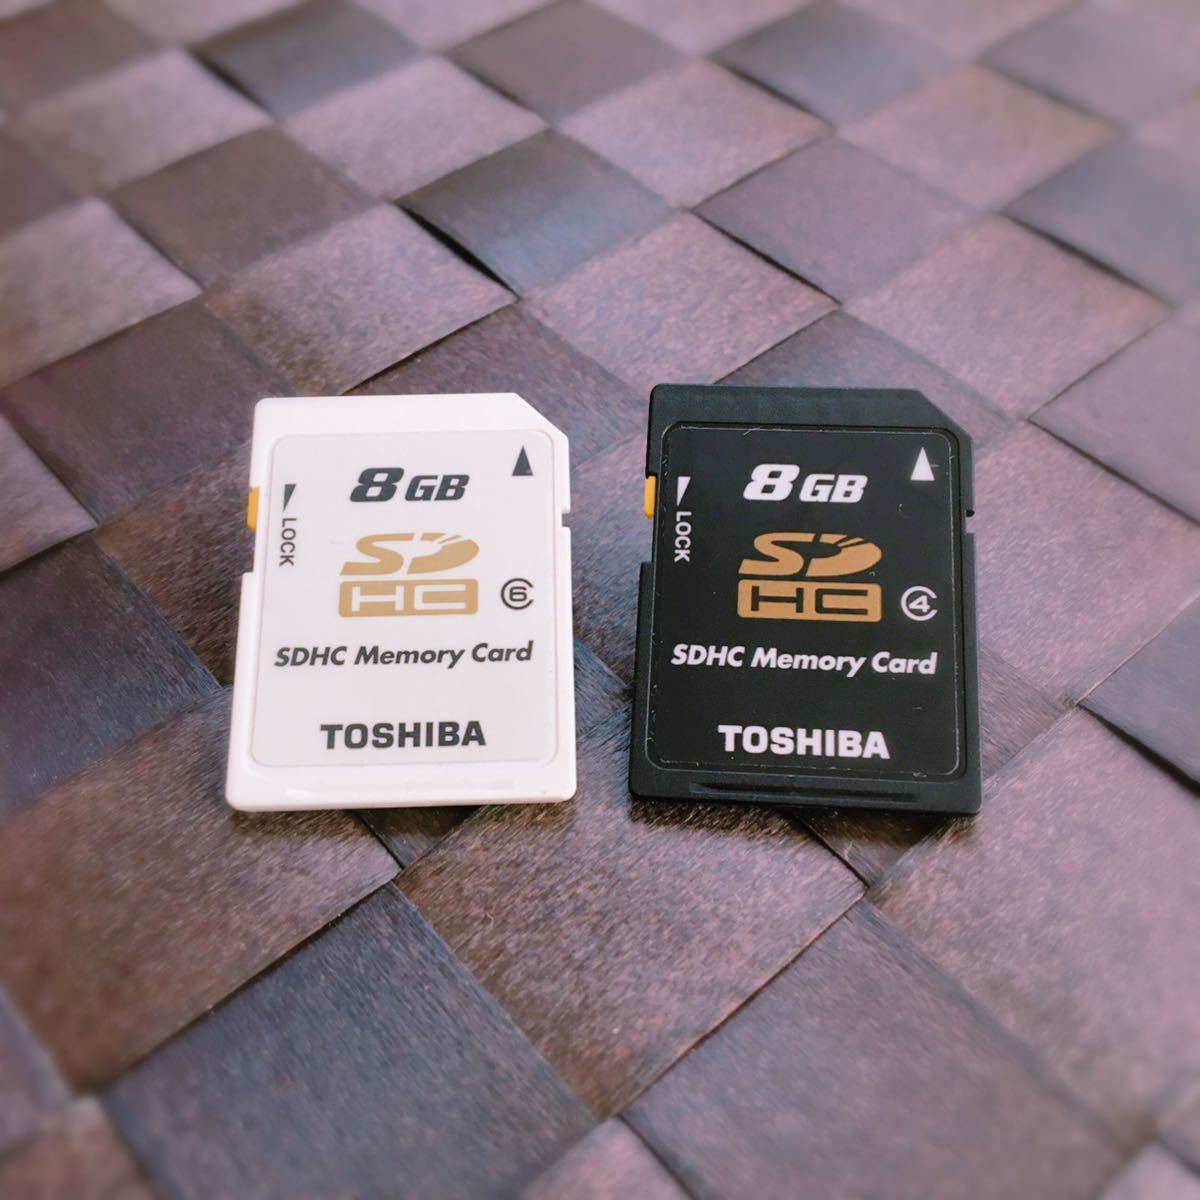 * TOSHIBA * Toshiba white black set * 8GB * digital camera SD card * memory card 8G